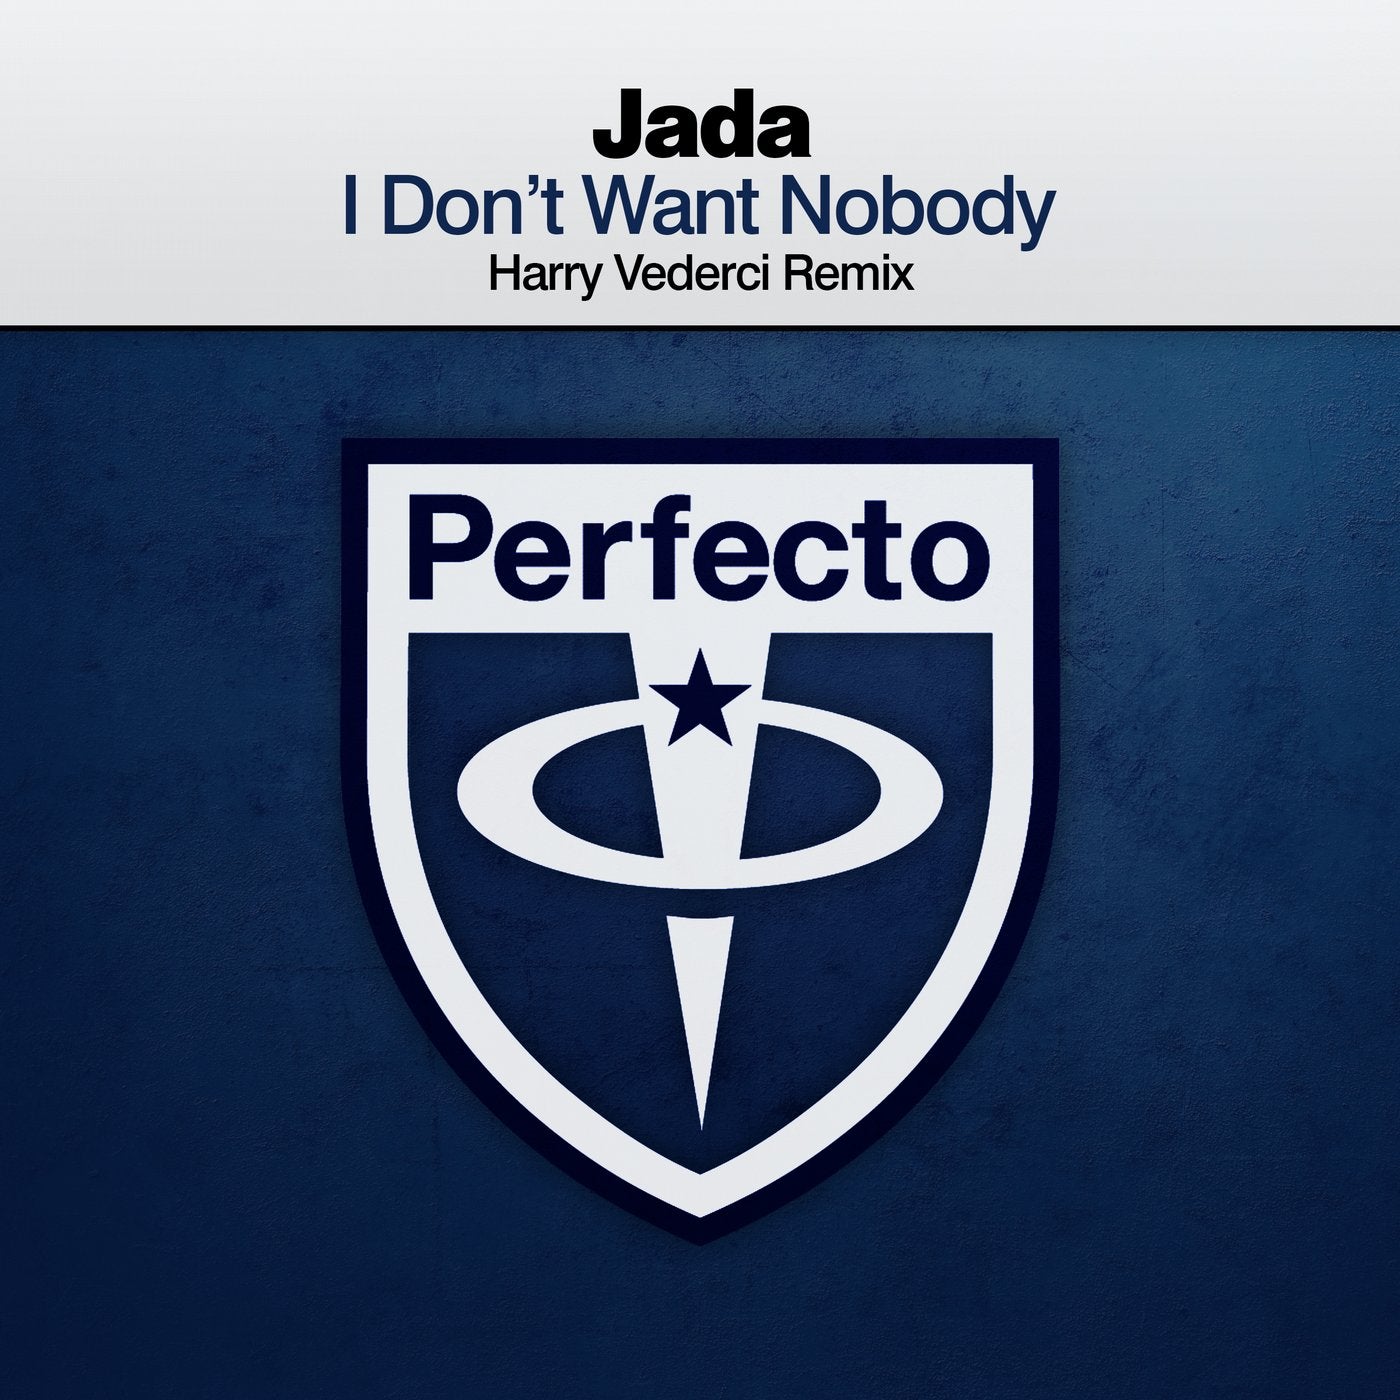 I Don't Want Nobody - Harry Vederci Remix